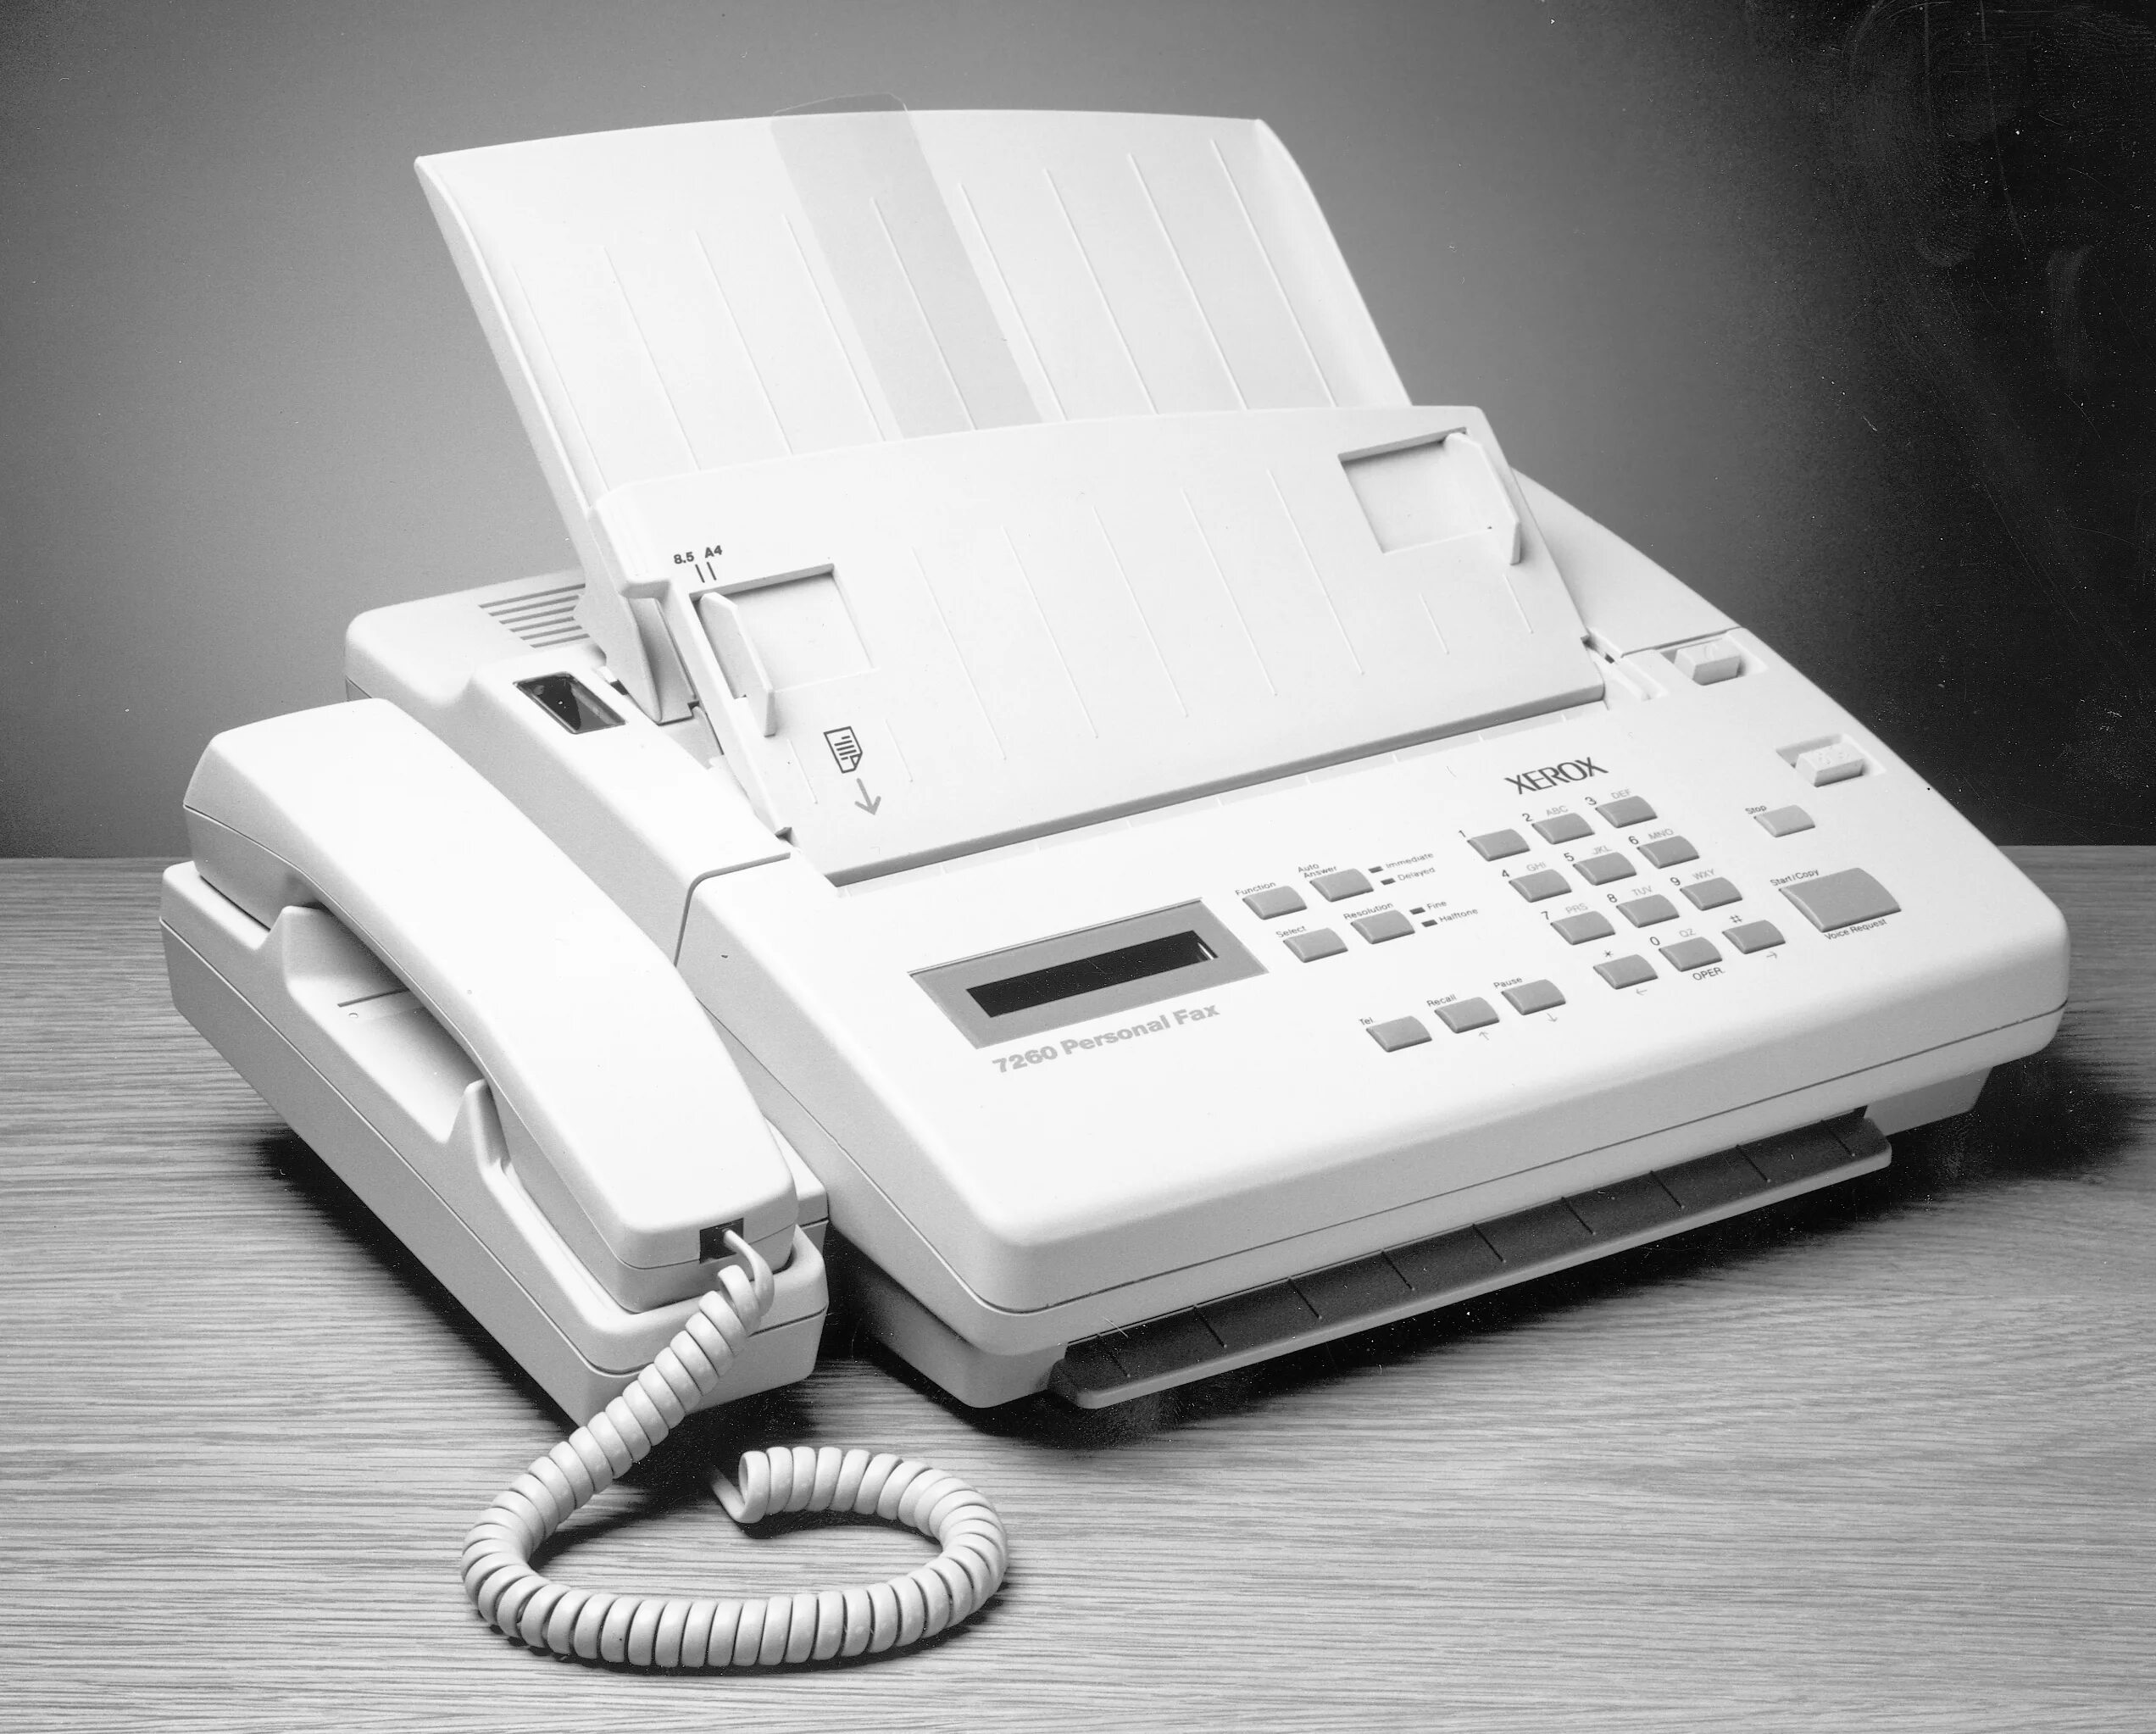 Fax-220 факсимильный аппарат. Xerox Fax 1994. Факсимильный аппарат Panasonic FC-984. Факс 1990.